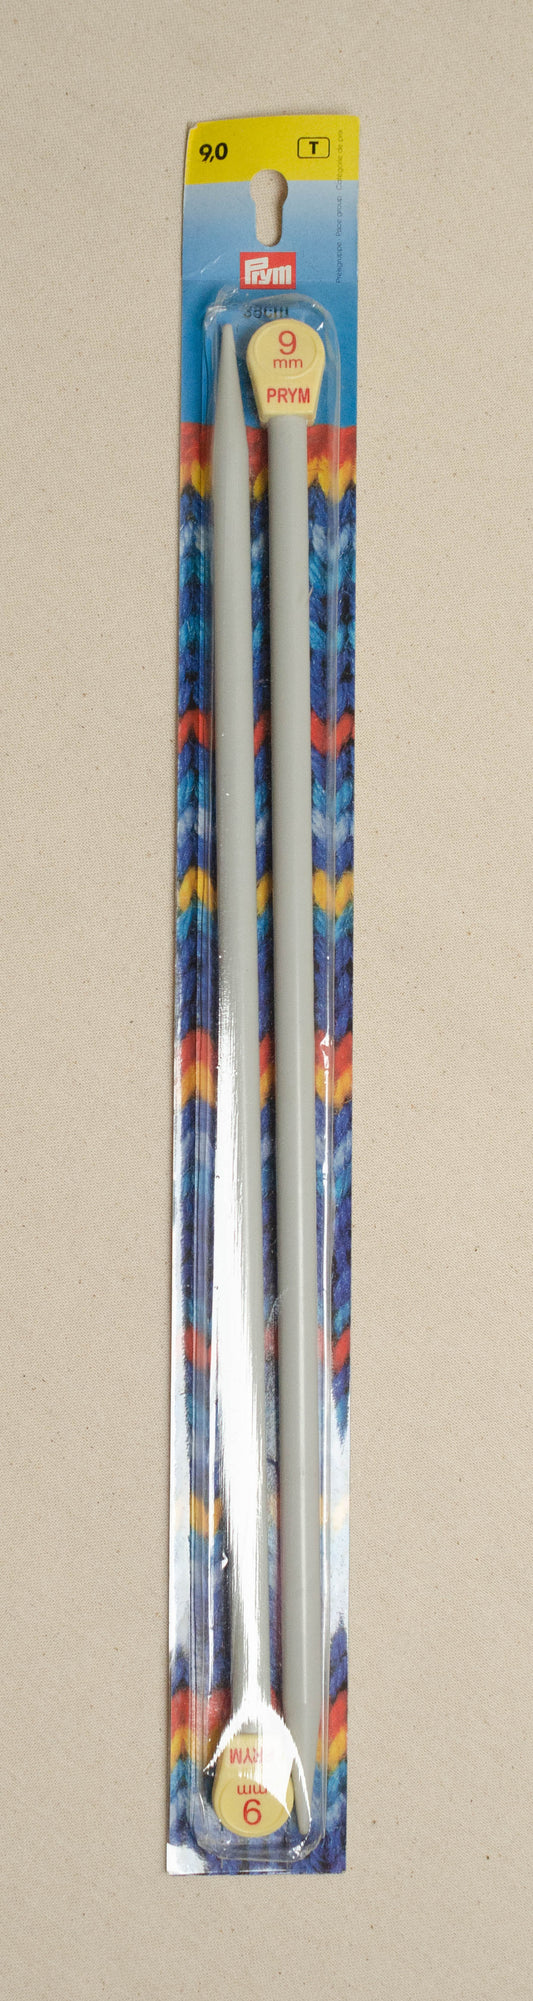 Prym 35cm Knitting Needles - 35cm X 9.0mm